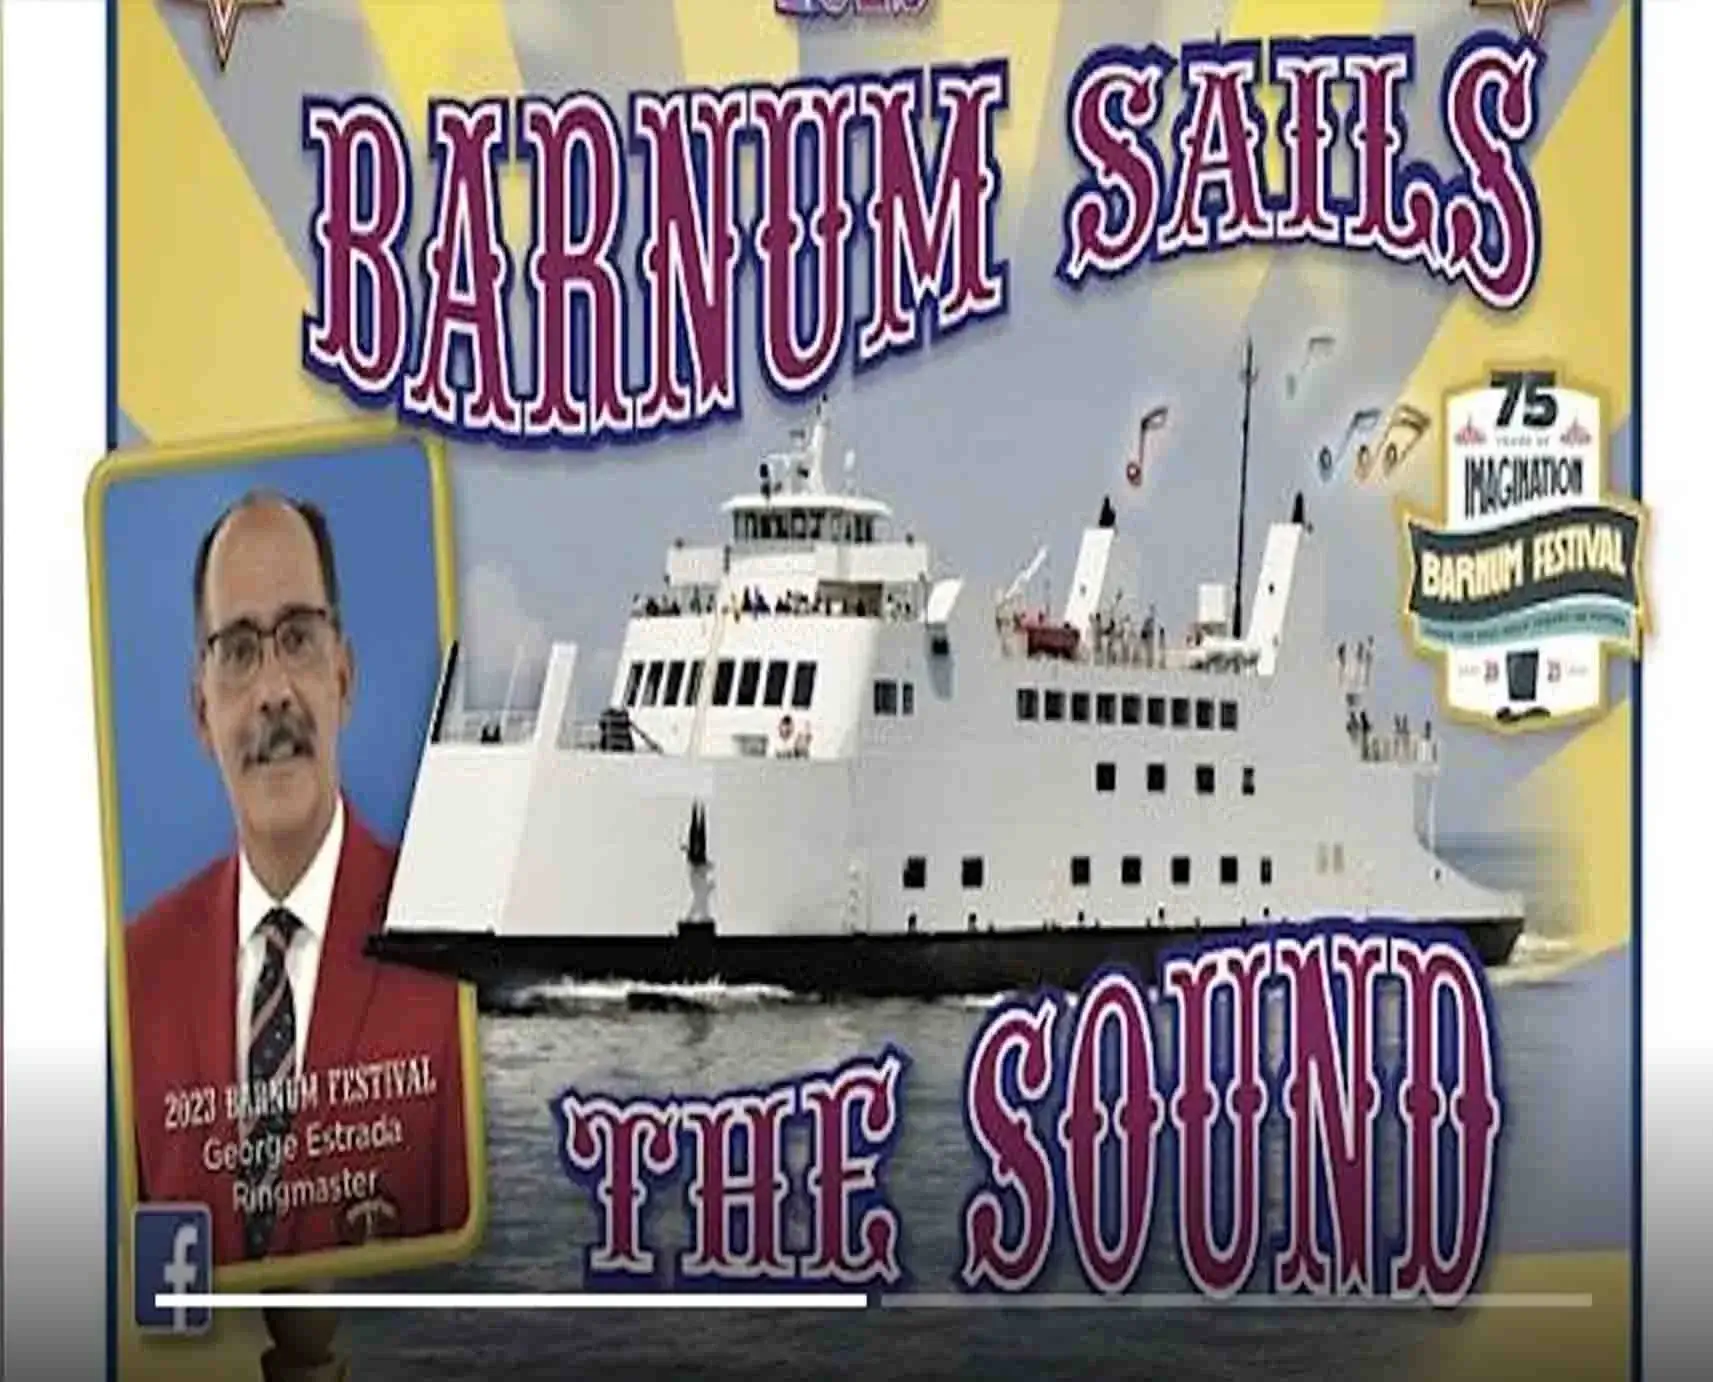 Barnum Sails the Sound